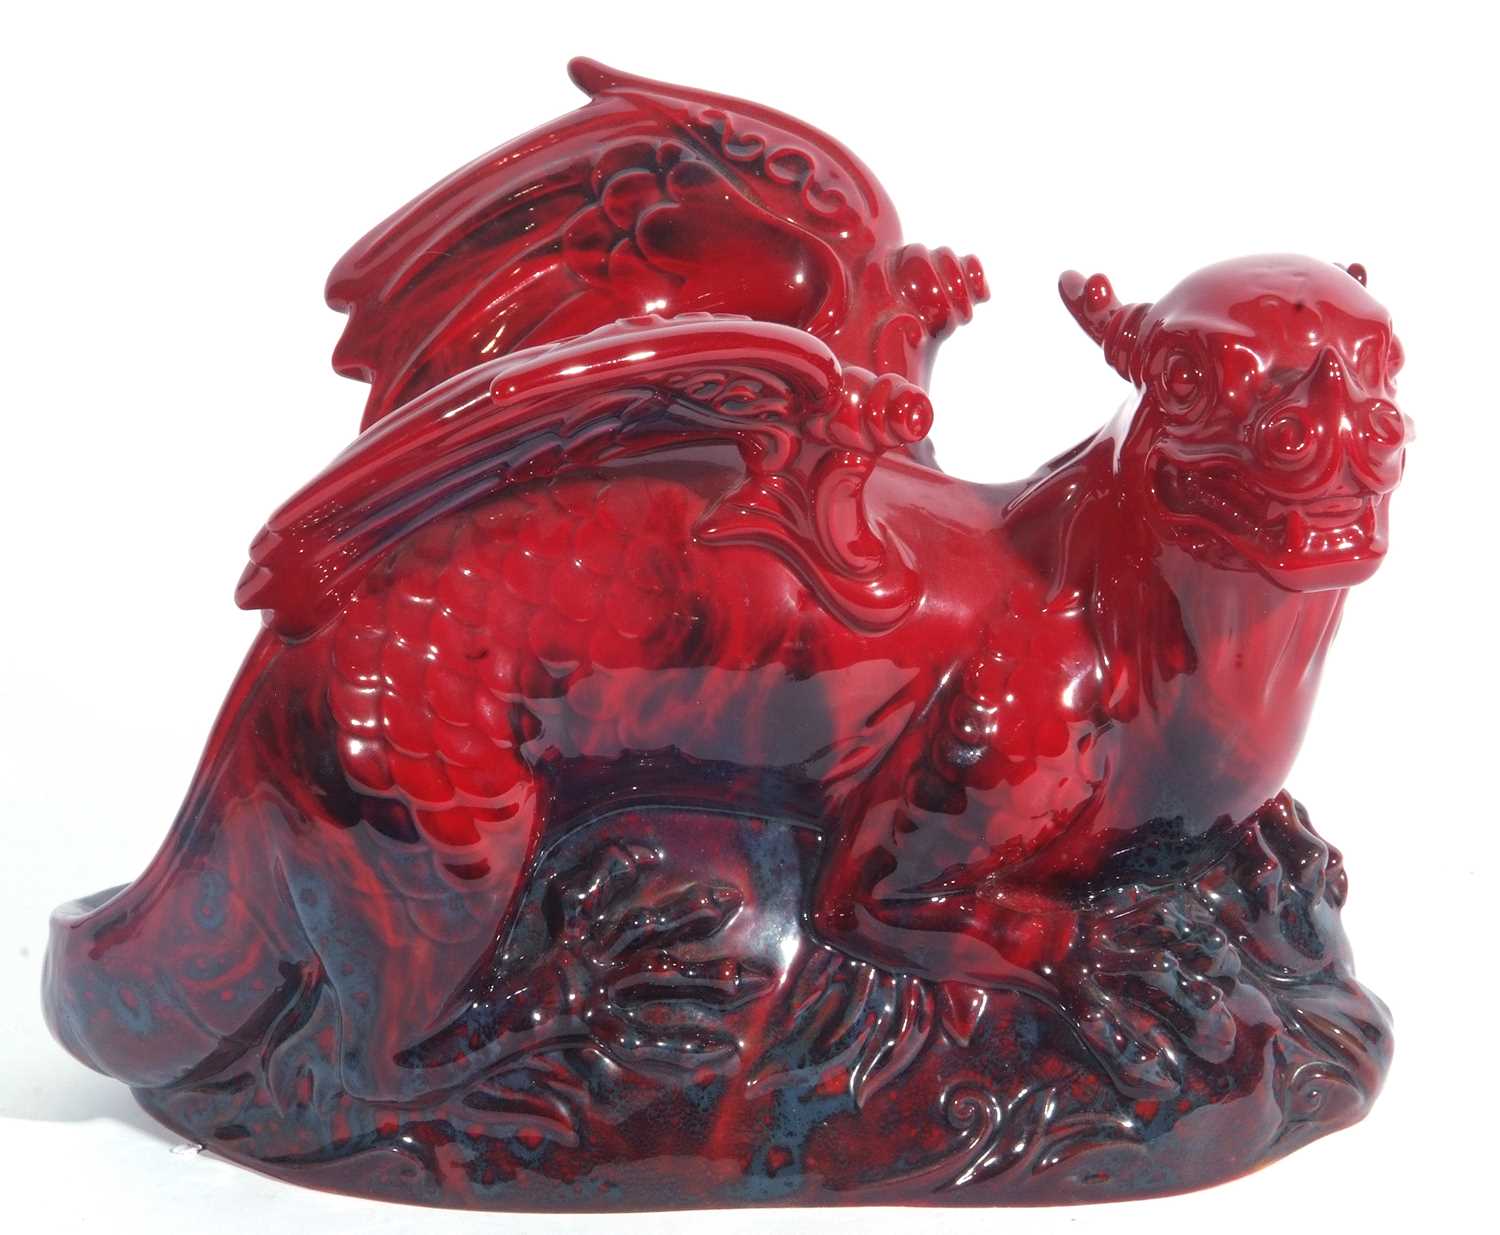 Flambe figure of a dragon on rock work - Image 2 of 10